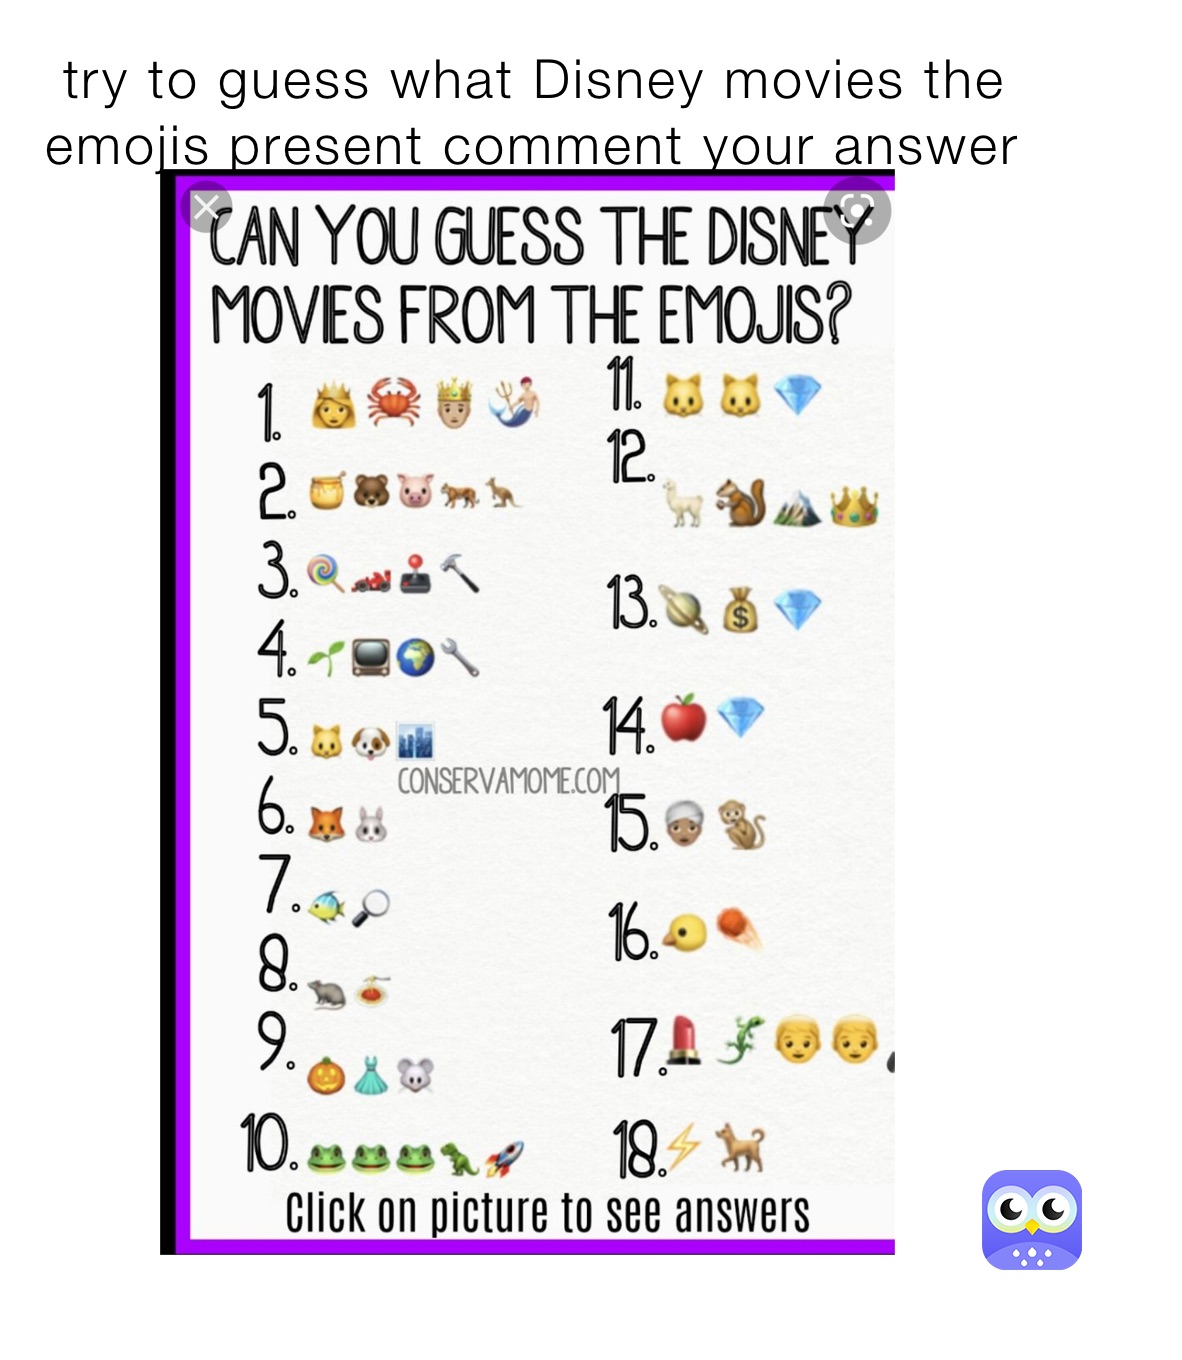 disney movies told in emojis